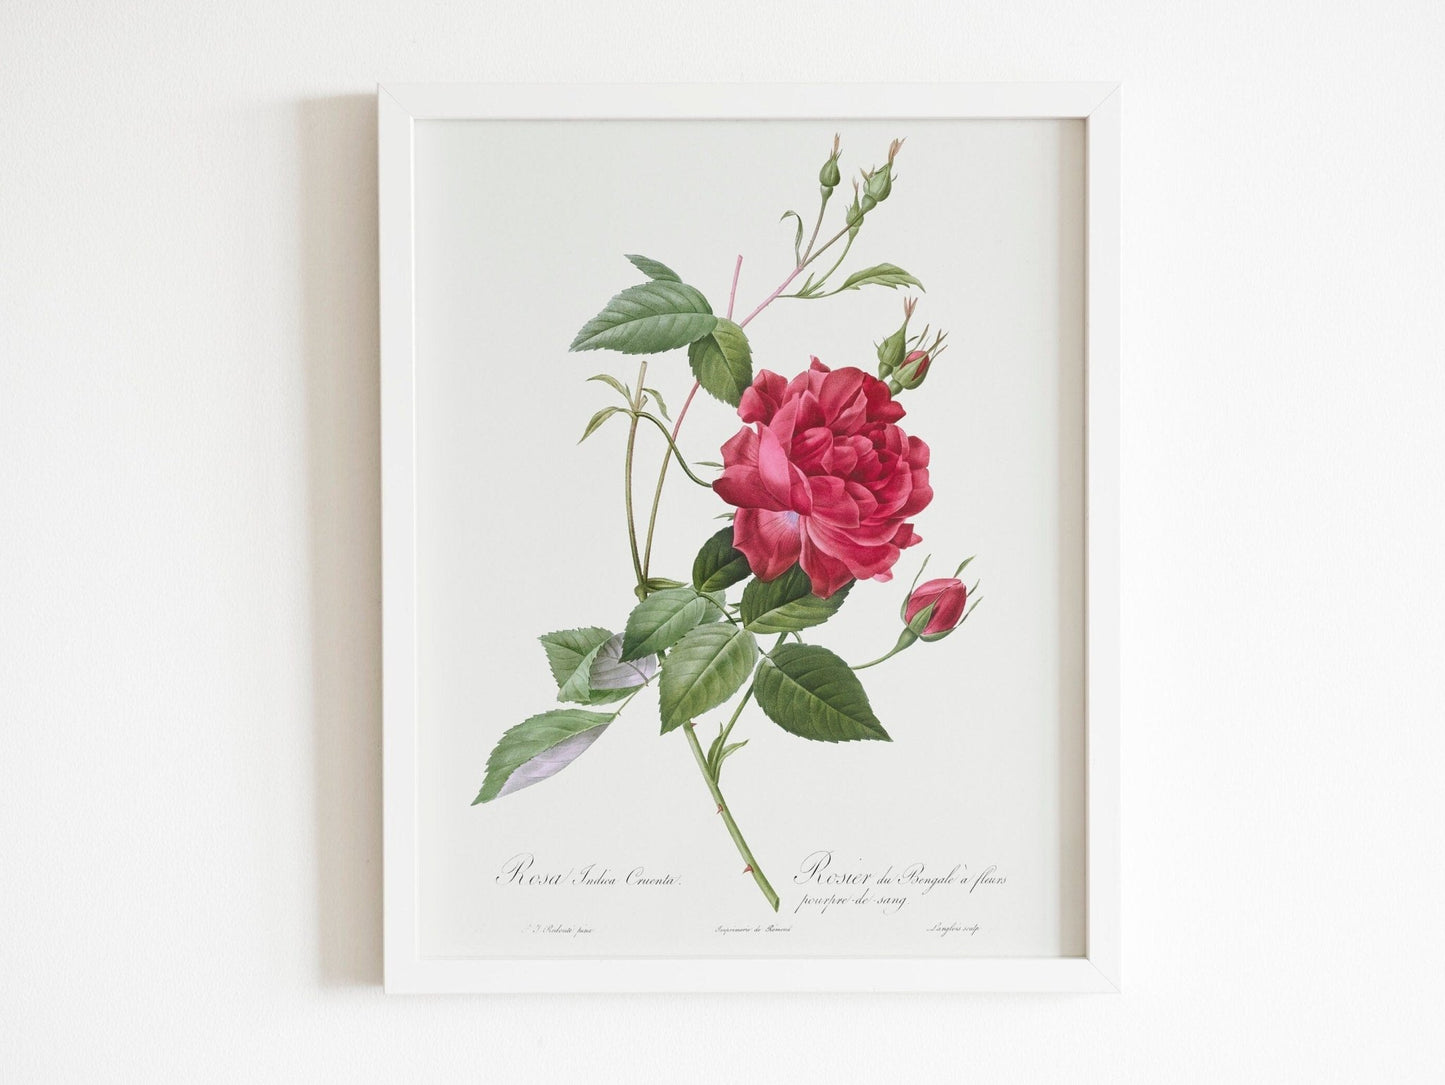 Set of 3 Lily & Roses Prints by Pierre - Joseph Redouté (Raphael of Flowers) - Pathos Studio - Art Print Sets